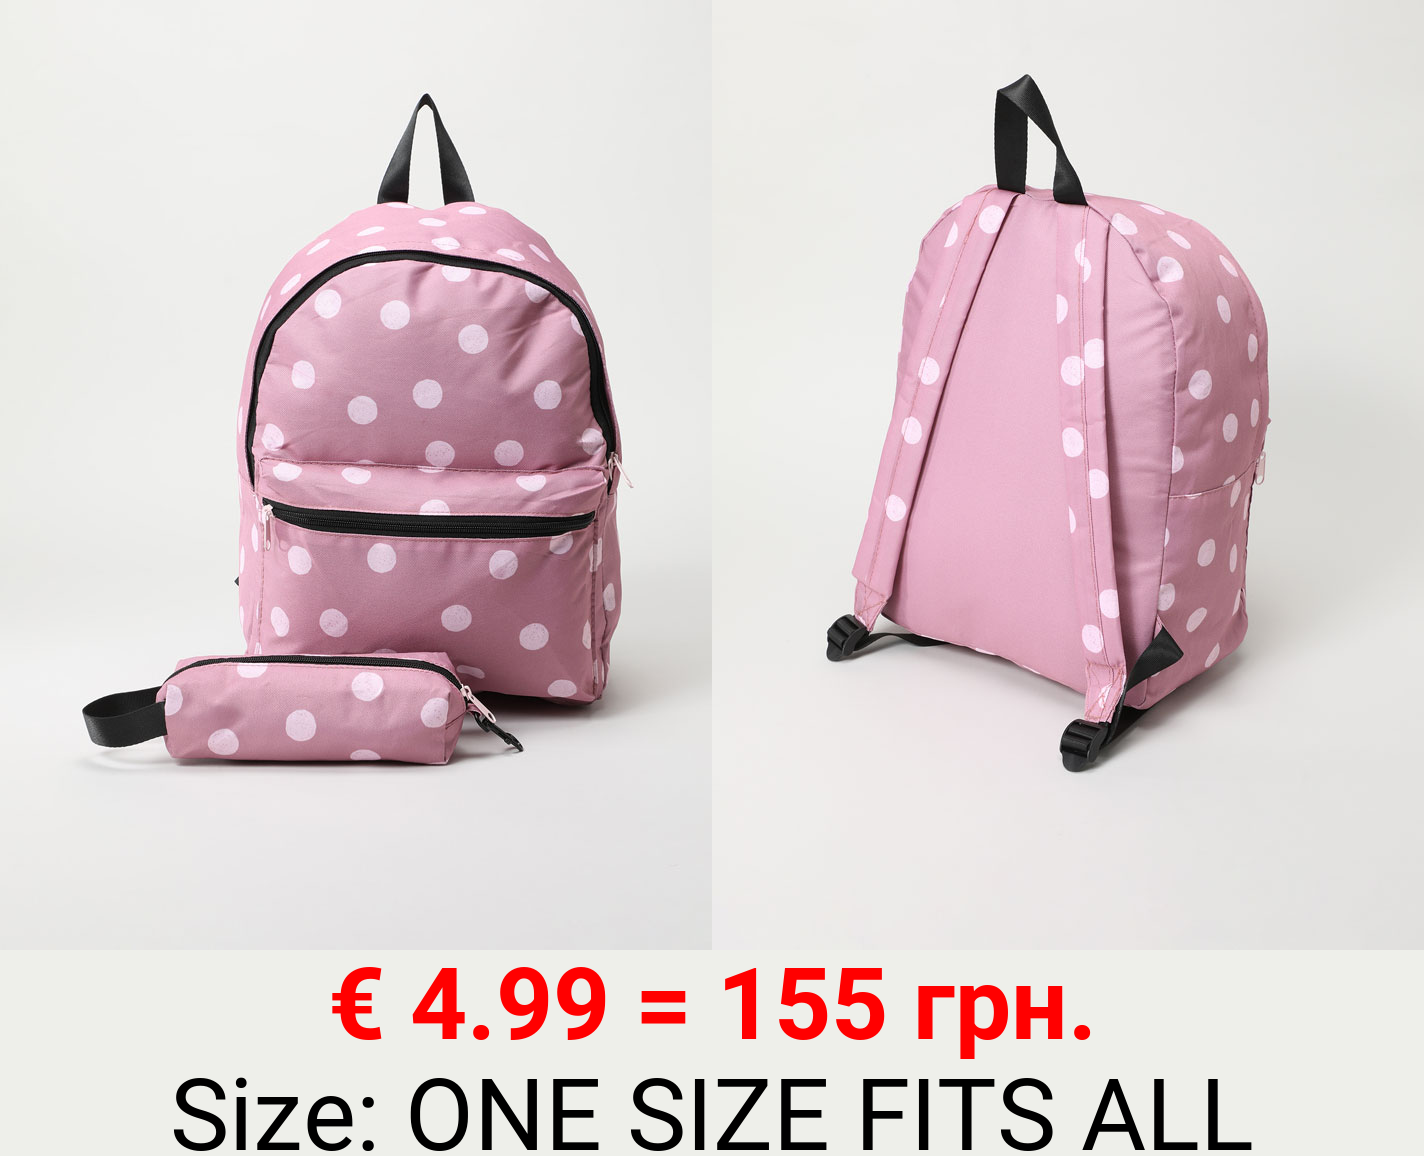 Polka dot backpack and pencil case set